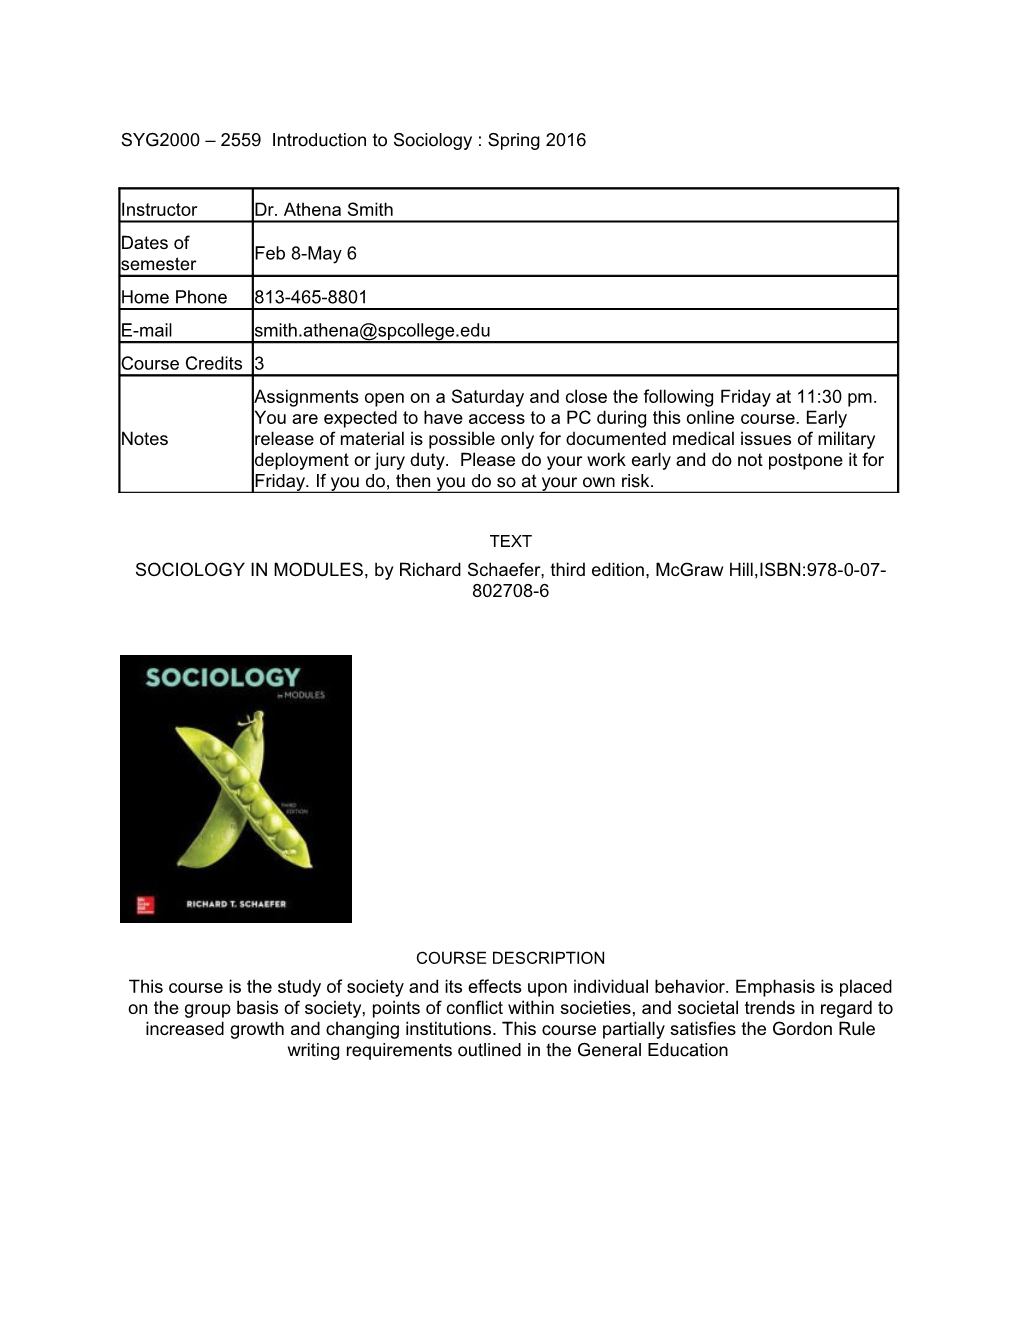 SOCIOLOGY in MODULES, by Richard Schaefer, Third Edition, Mcgraw Hill,ISBN:978-0-07-802708-6